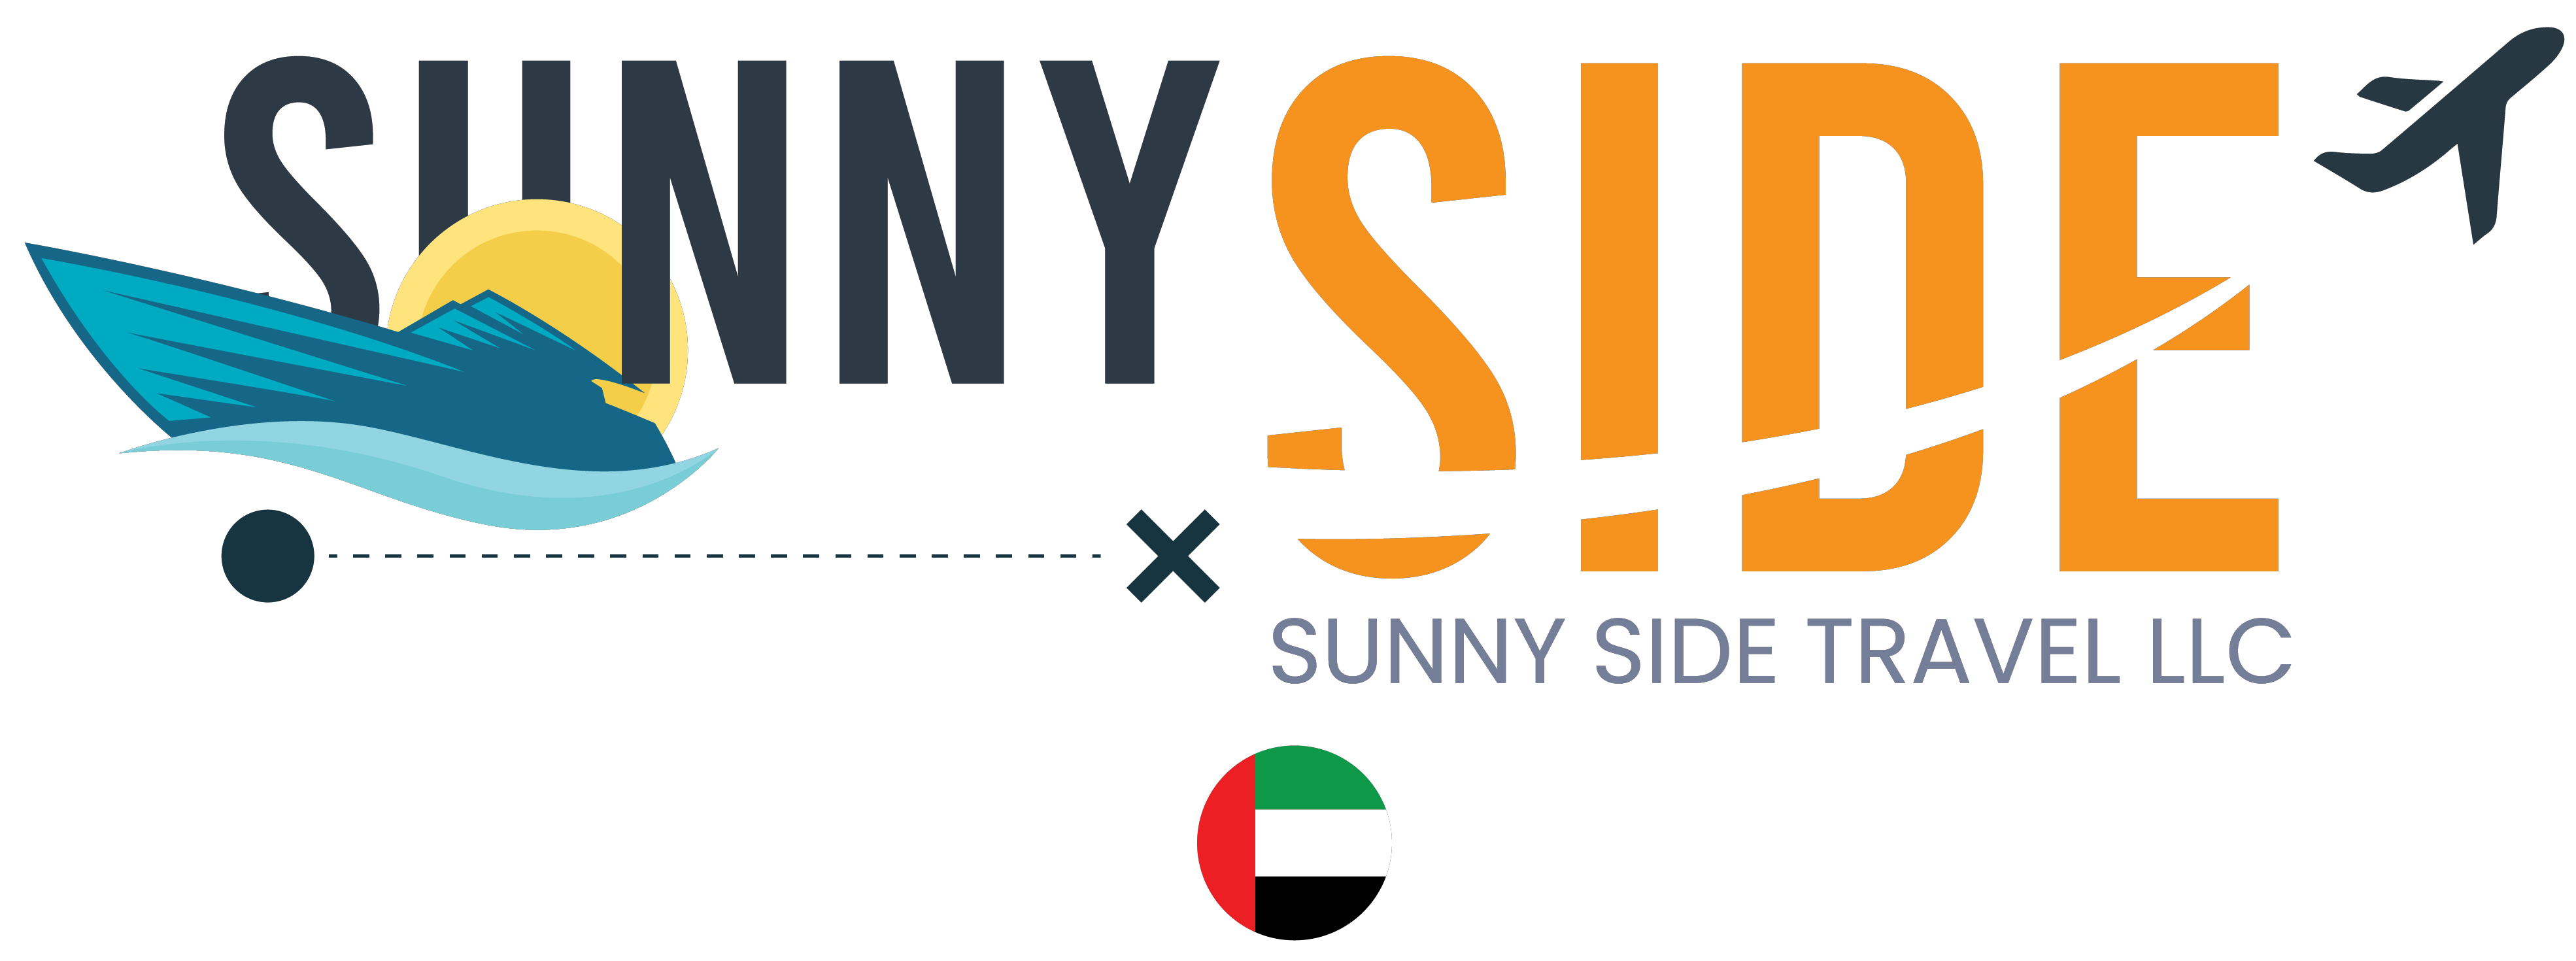 Admin confirmation – Sunny Side